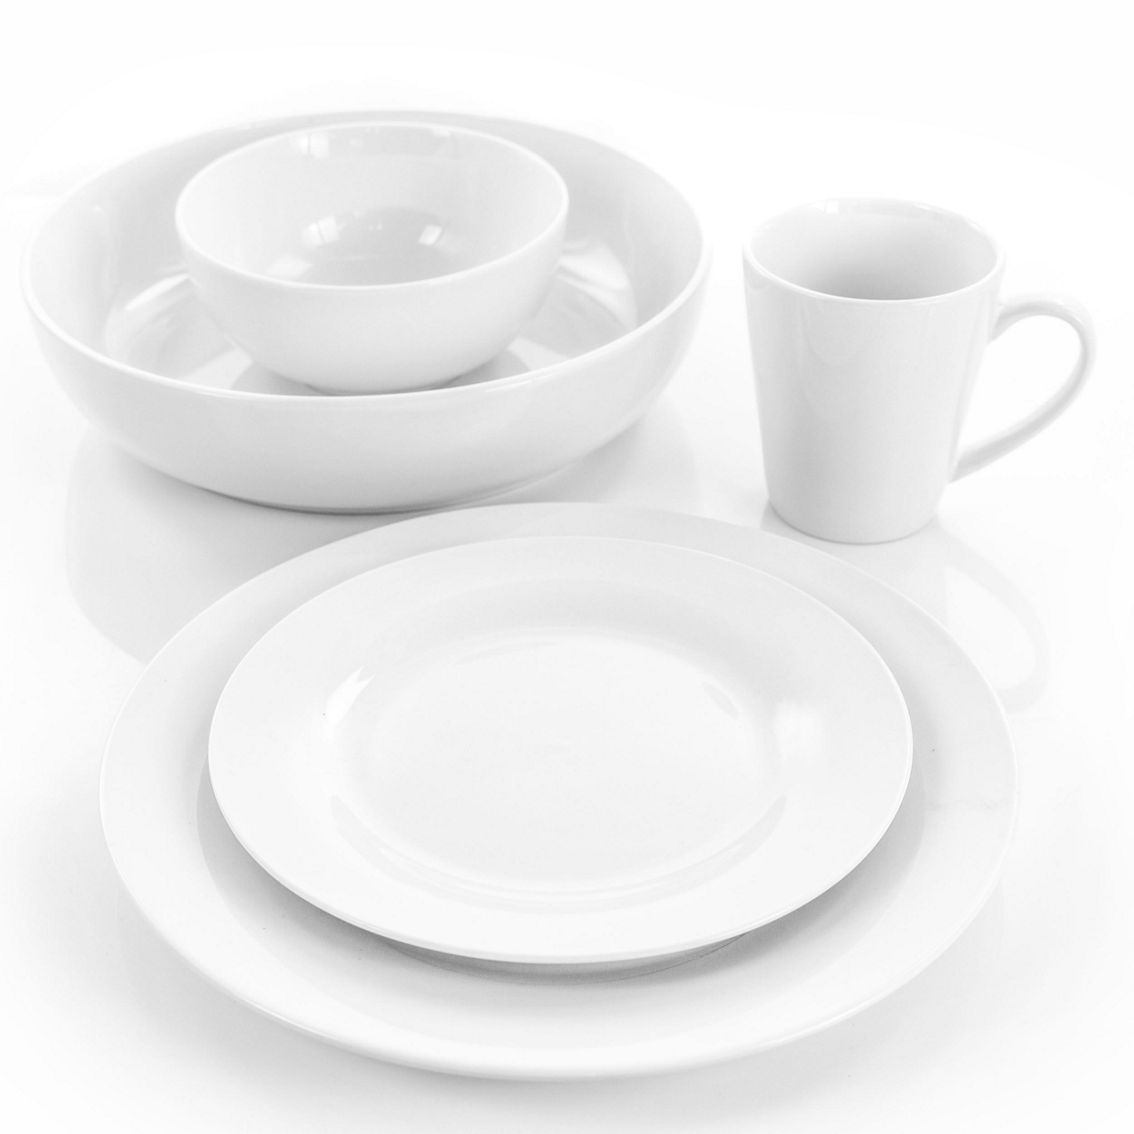 Elama Carey 18 Piece Round Porcelain Dinnerware Set in White - Image 2 of 5